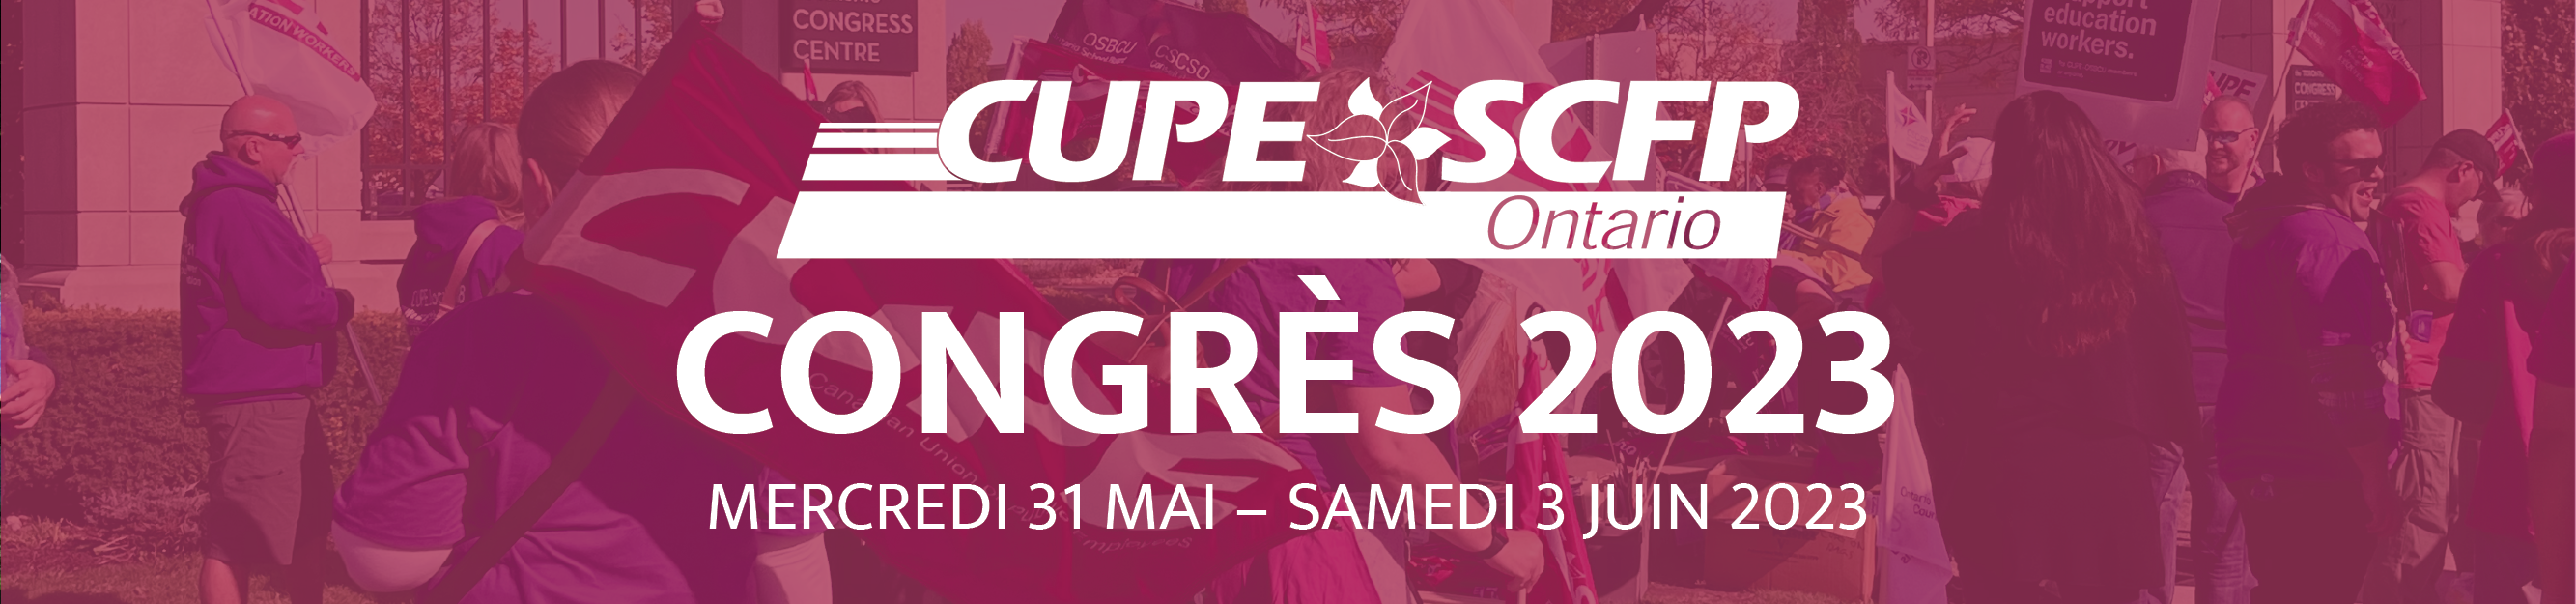 CUPE SCFP Ontario Congres 2023 Mercredi, 31MAI - SAMEDI, 3 JUIN, 2023